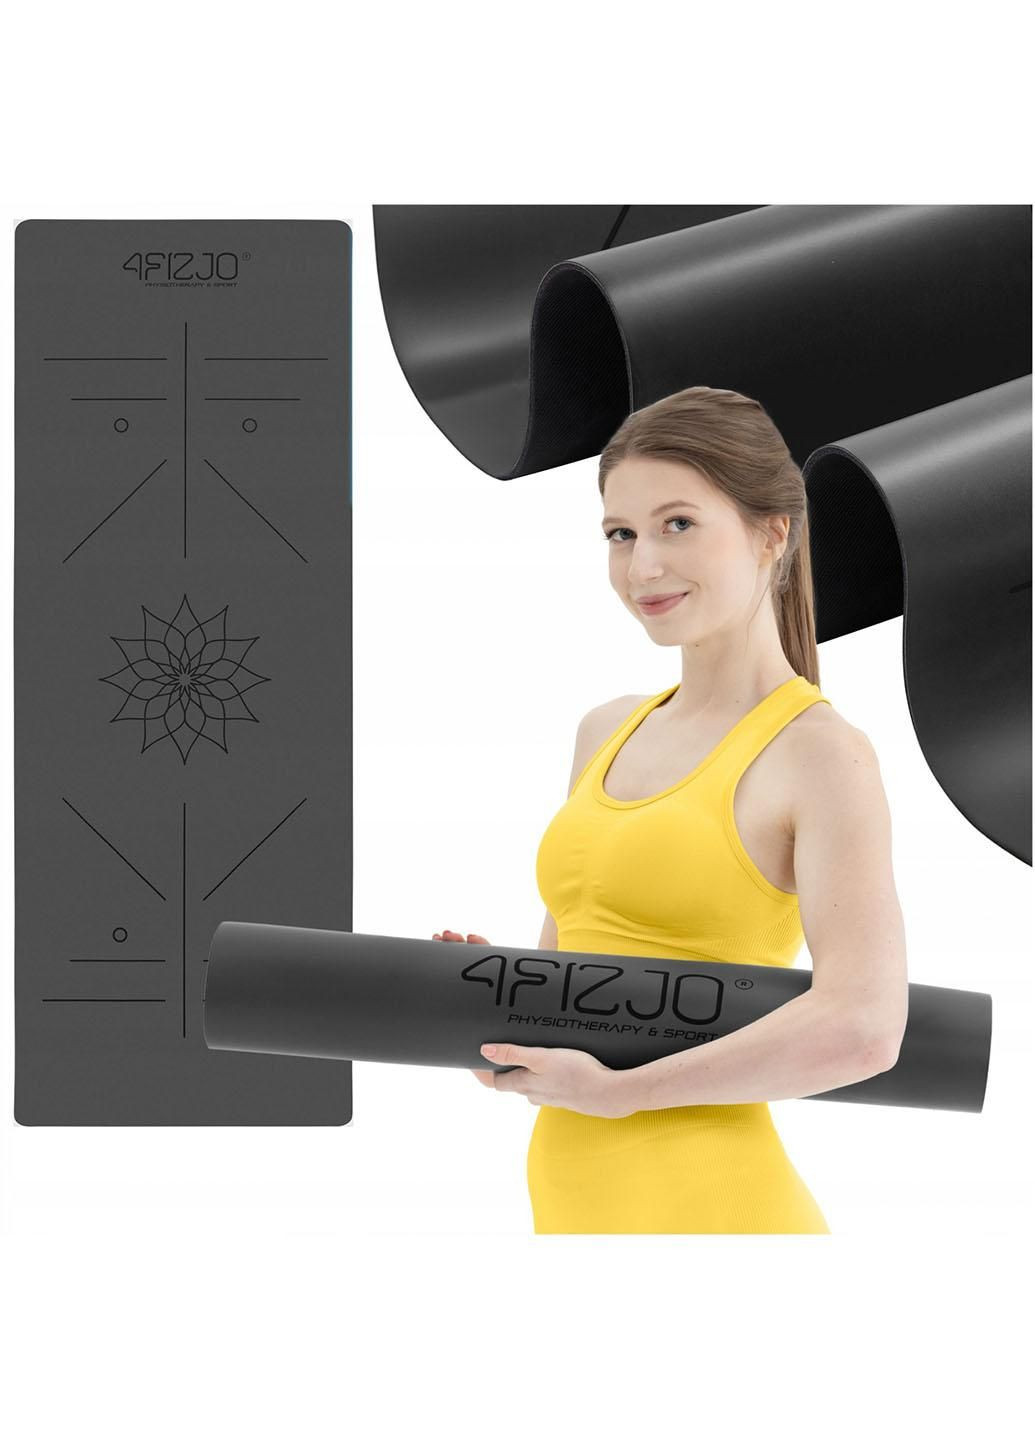 Коврик (мат) спортивный PU 183 x 68 x 0.4 см для йоги и фитнеса 4FJ0587 Black 4FIZJO (280822896)